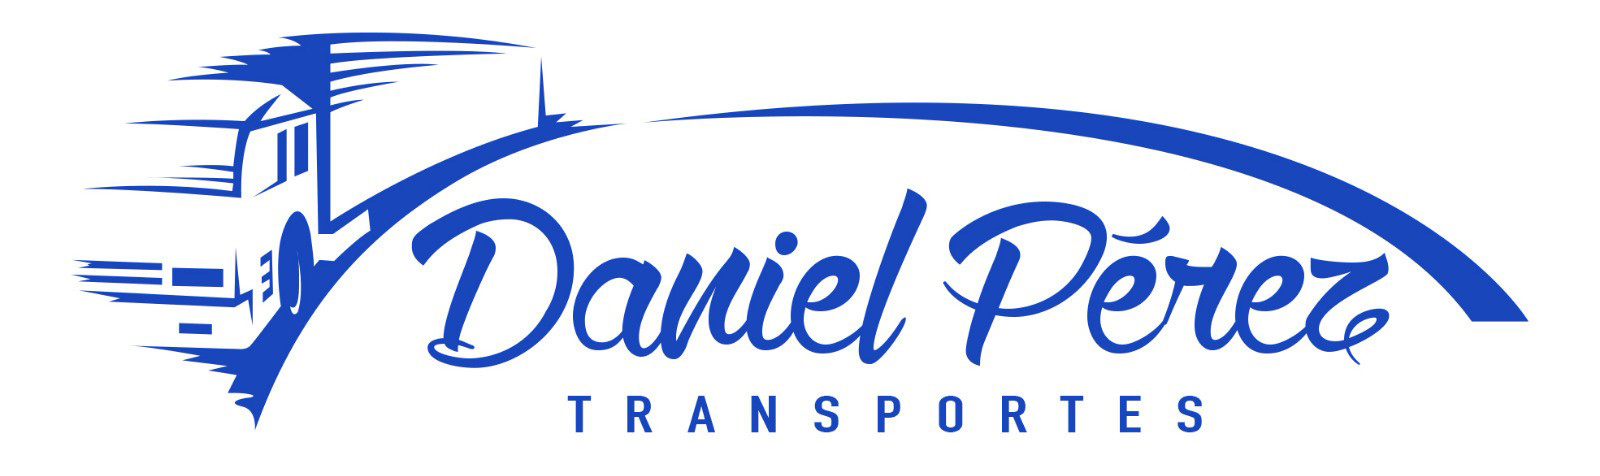 TRANSPORTES DANIEL PEREZ